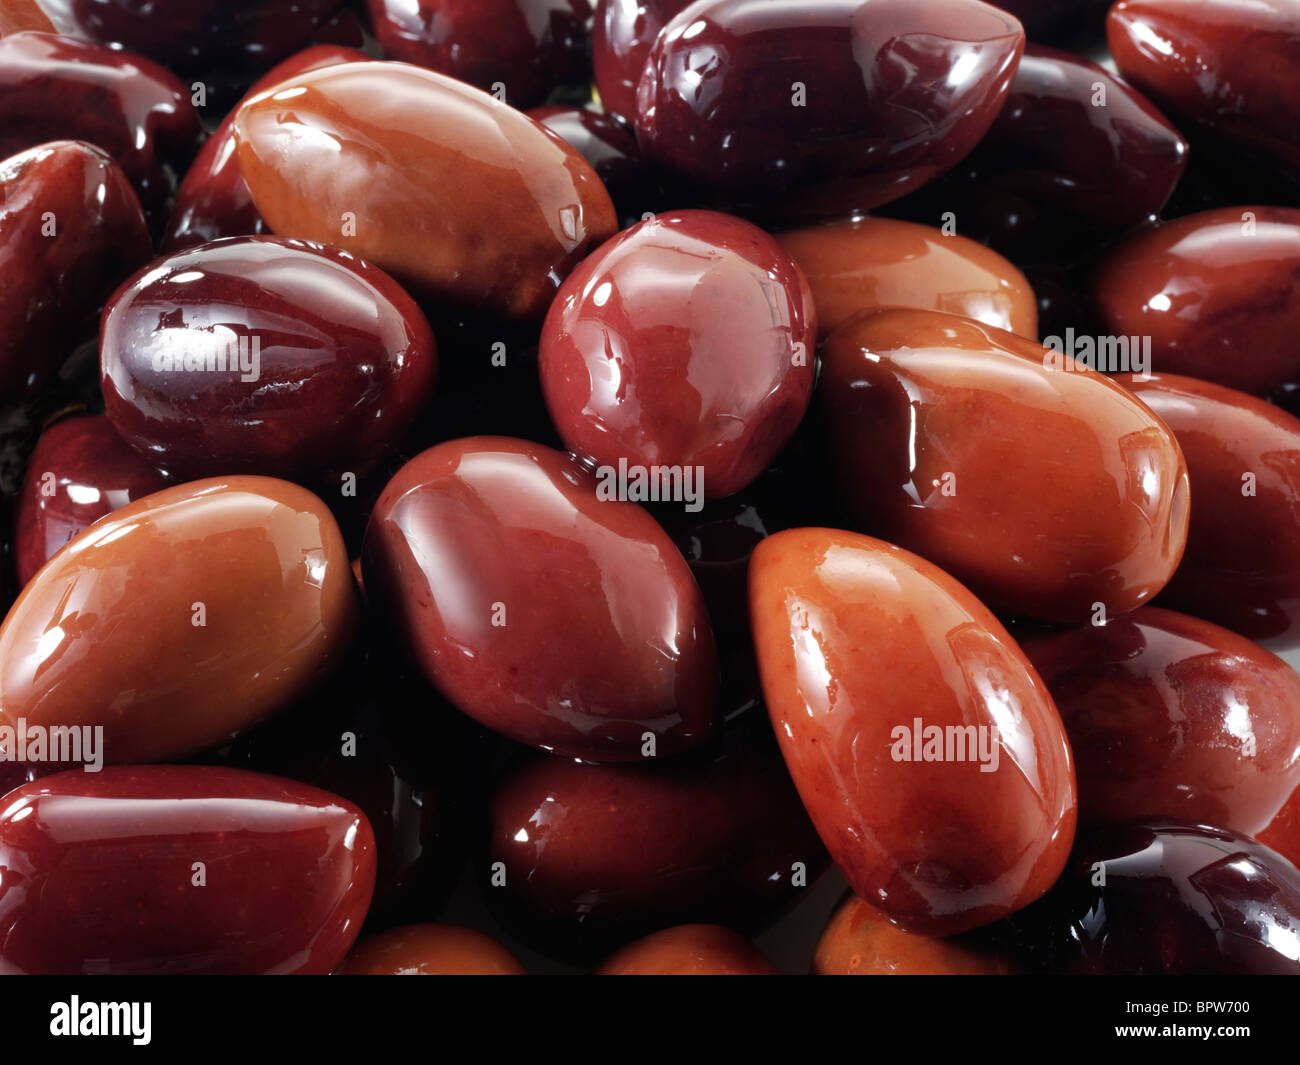 Fresh Kalamata olives photos, pictures & images. Stock Photo